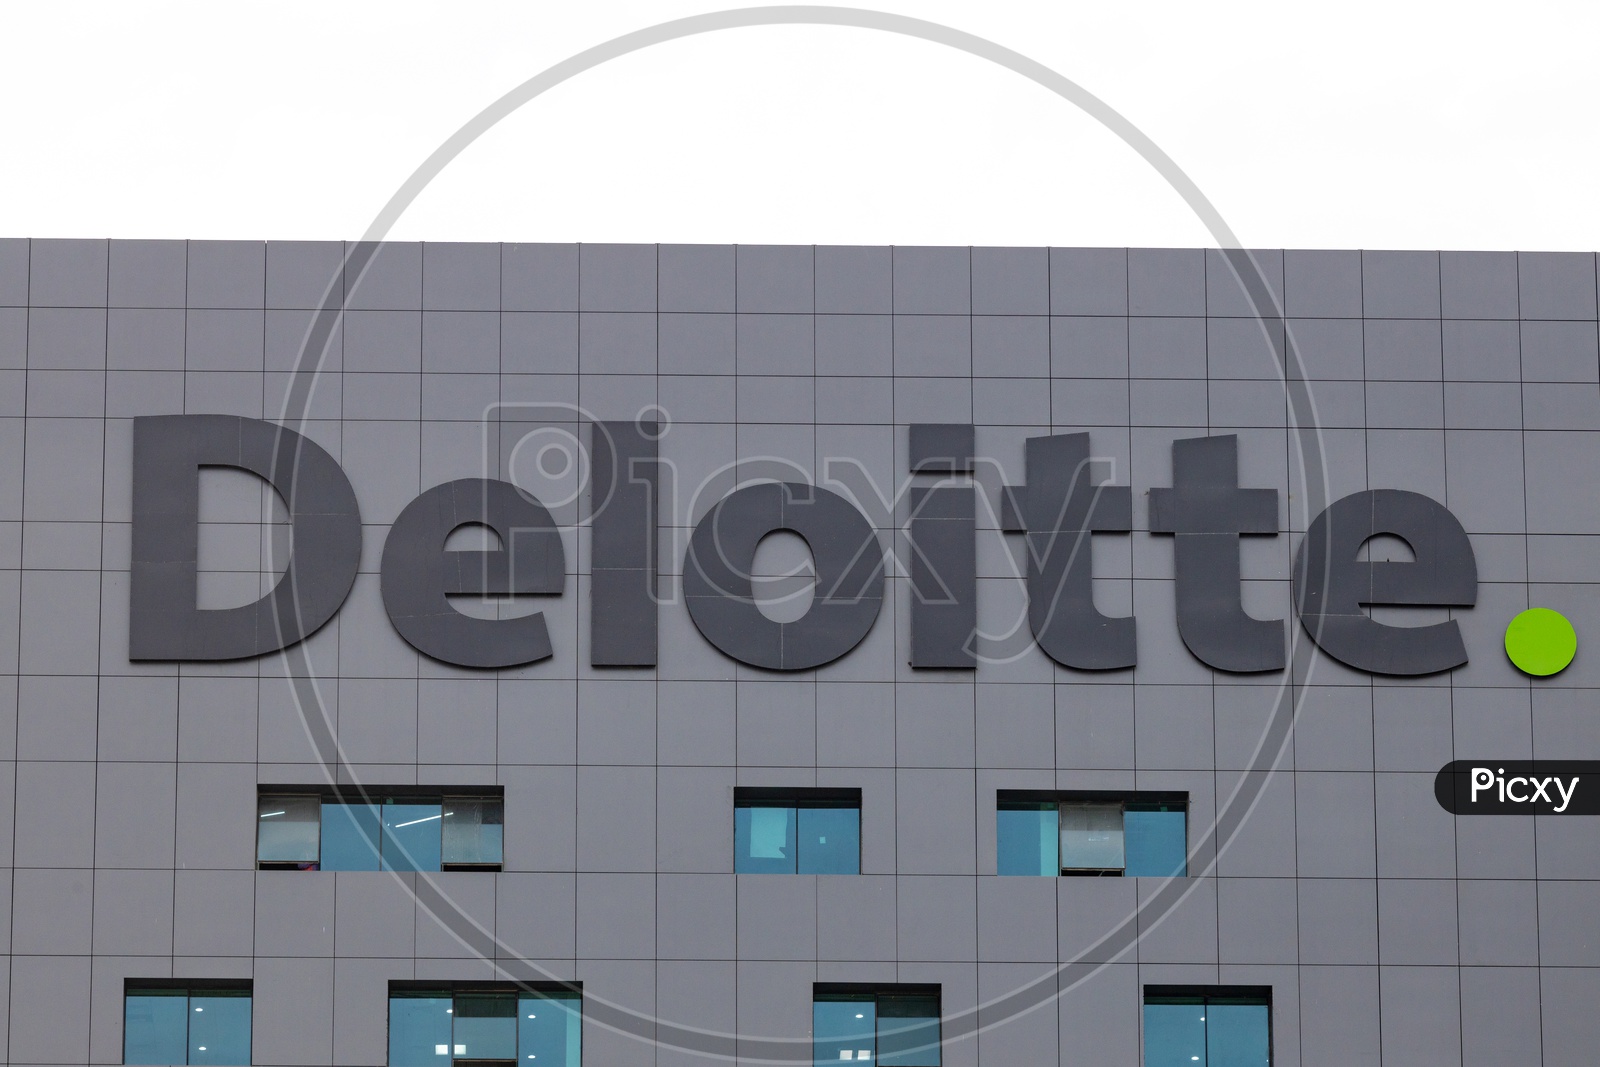 Deloitte Corporate Company Name On Office Facade